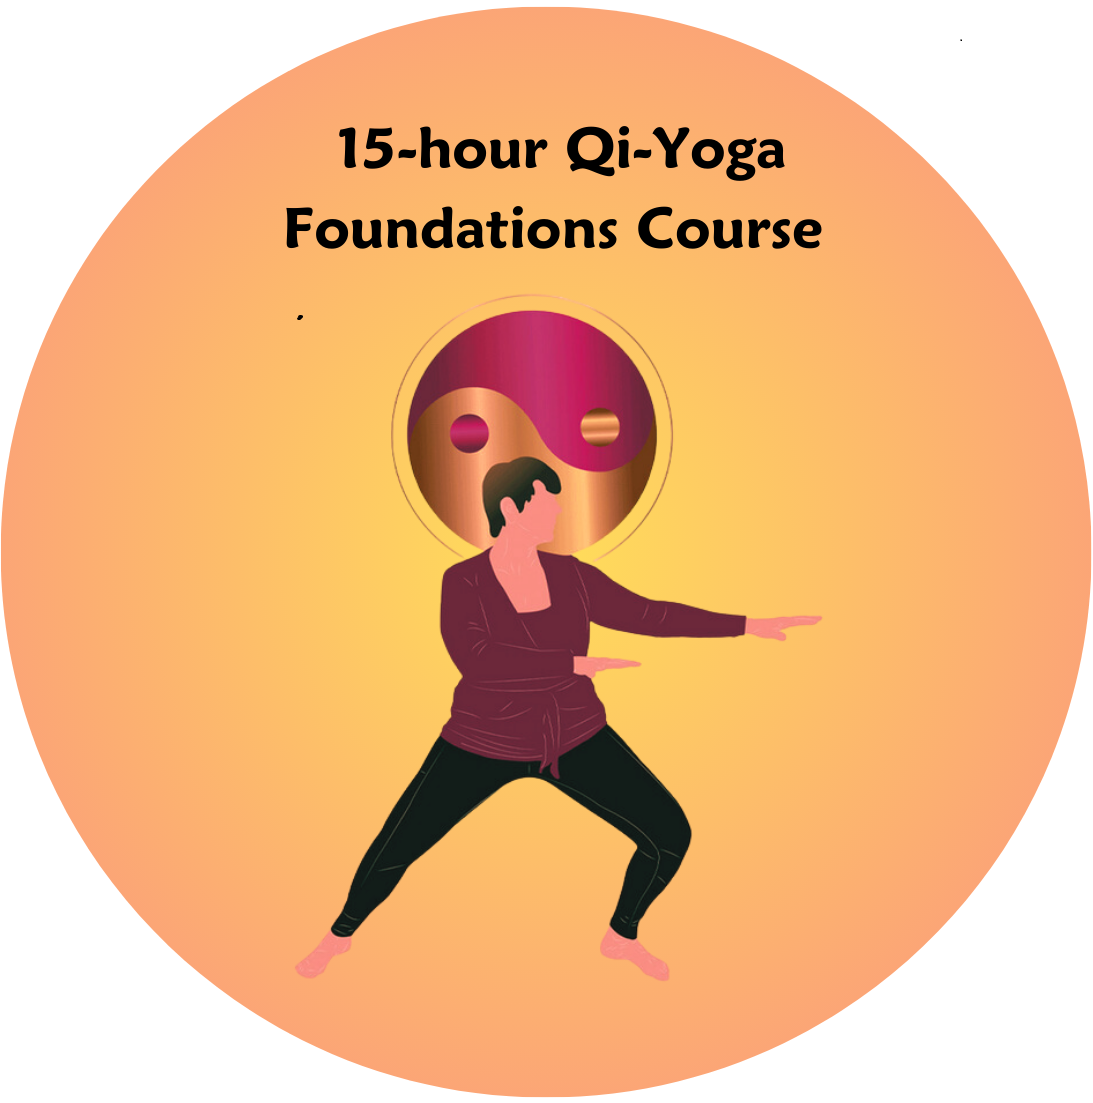 Qi-Yoga Foudnations Course